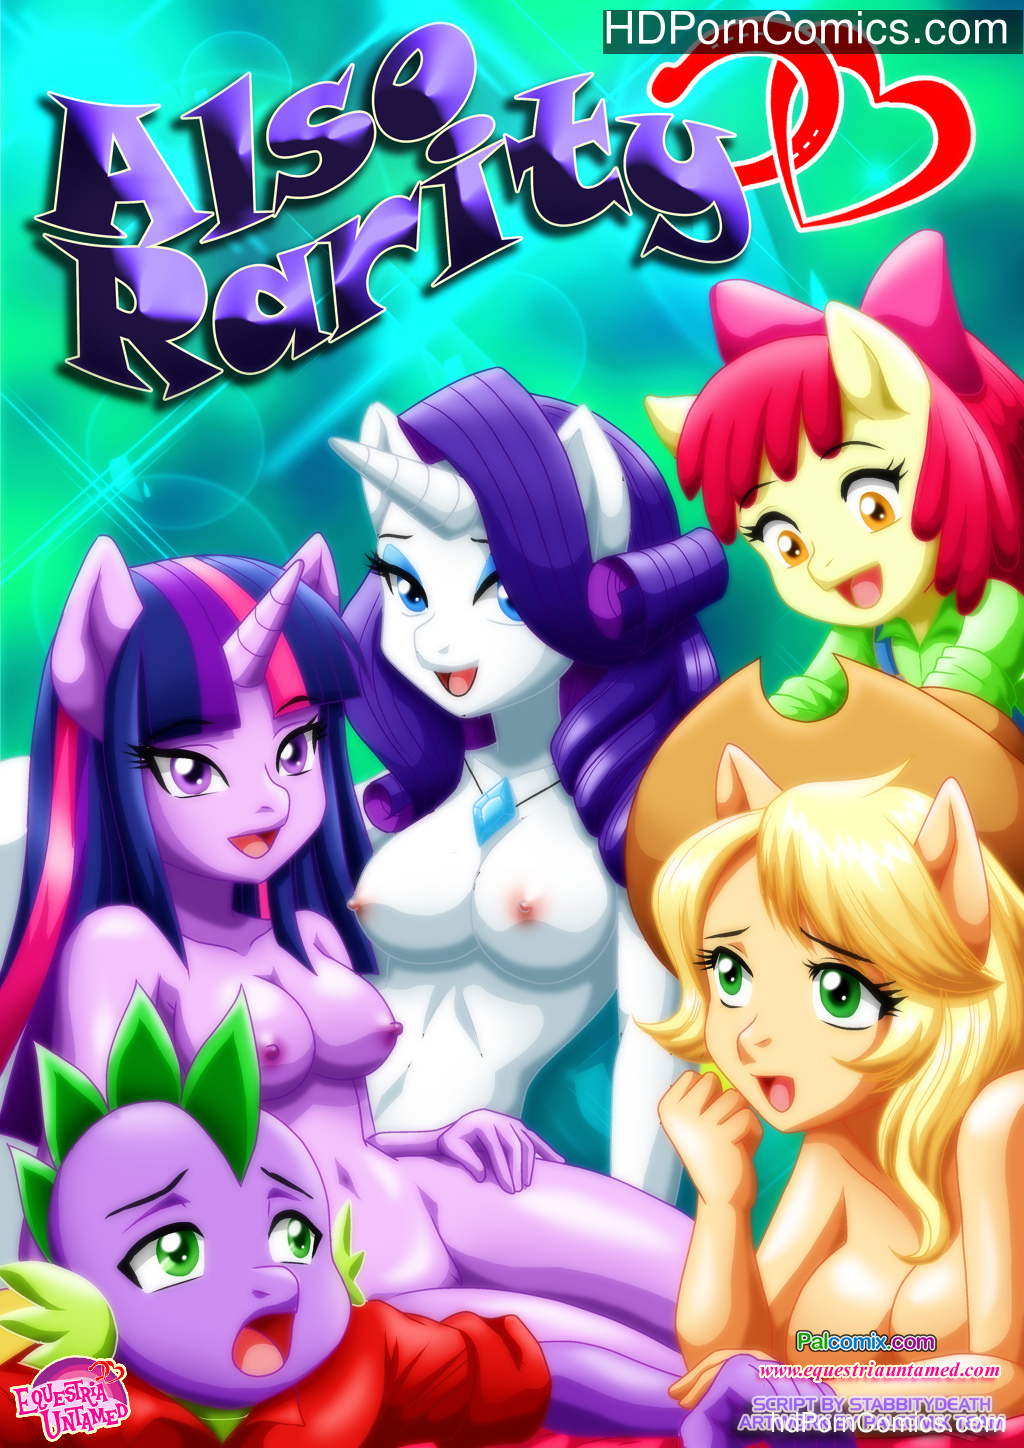 Hd Pone - Also Rarity (My Little Pony Friendship Is Magic) - Porncomics free Porn  Comic | HD Porn Comics